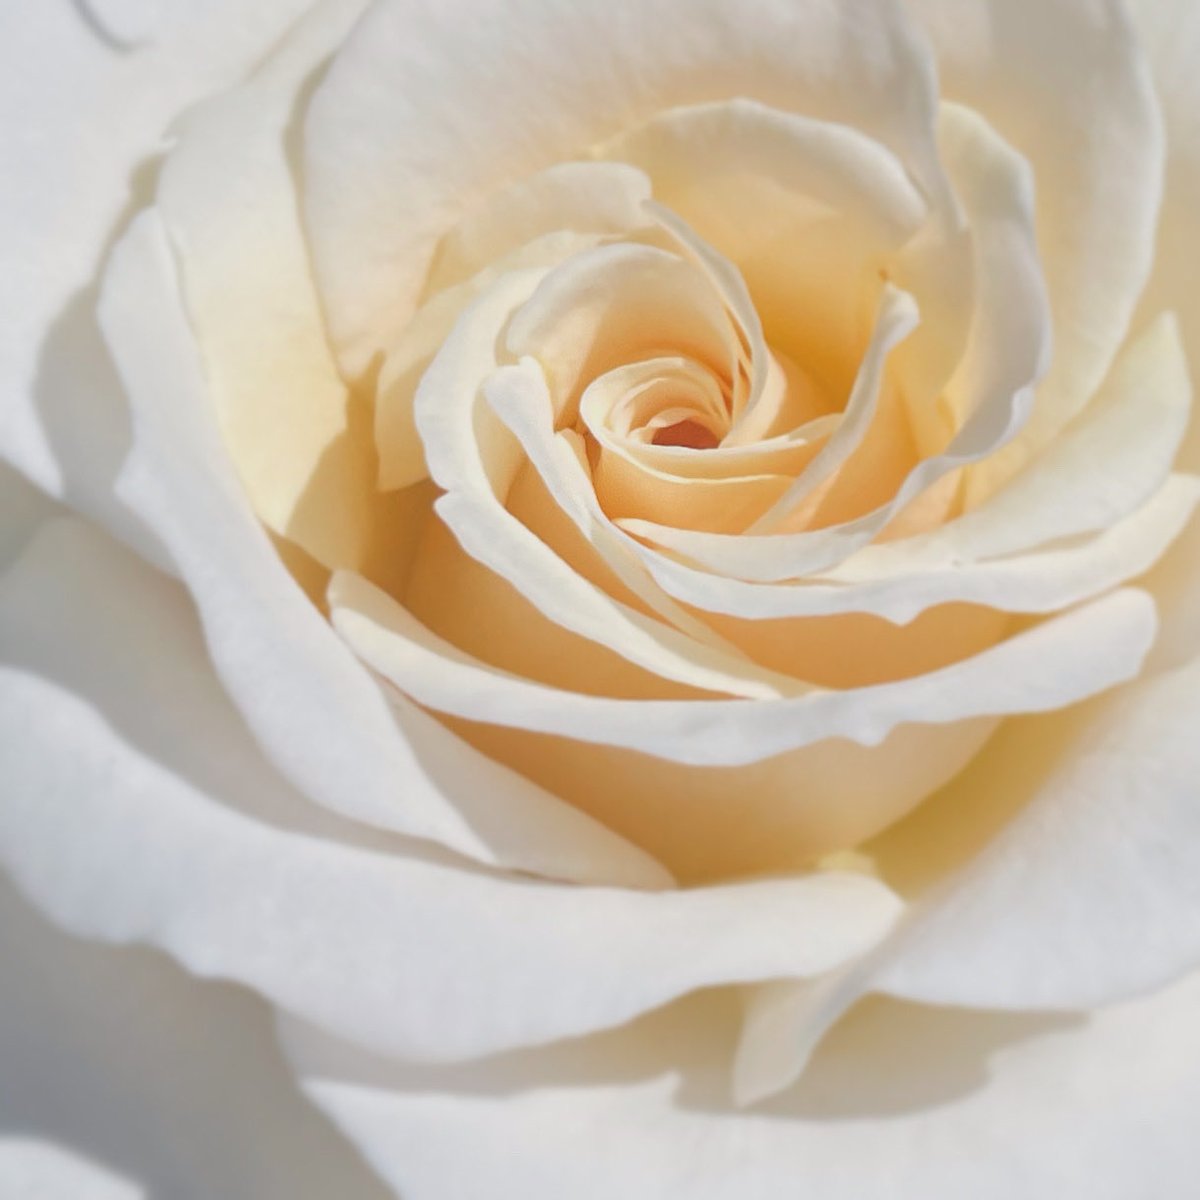 #rose #flowers #flowerphotography #flowerstagram #flwerlovers #naturephotography #nature #naturelovers #バラ #薔薇 #花 #道端の花 #花のある風景 #macro #macroflower #中之島バラ園 #rose